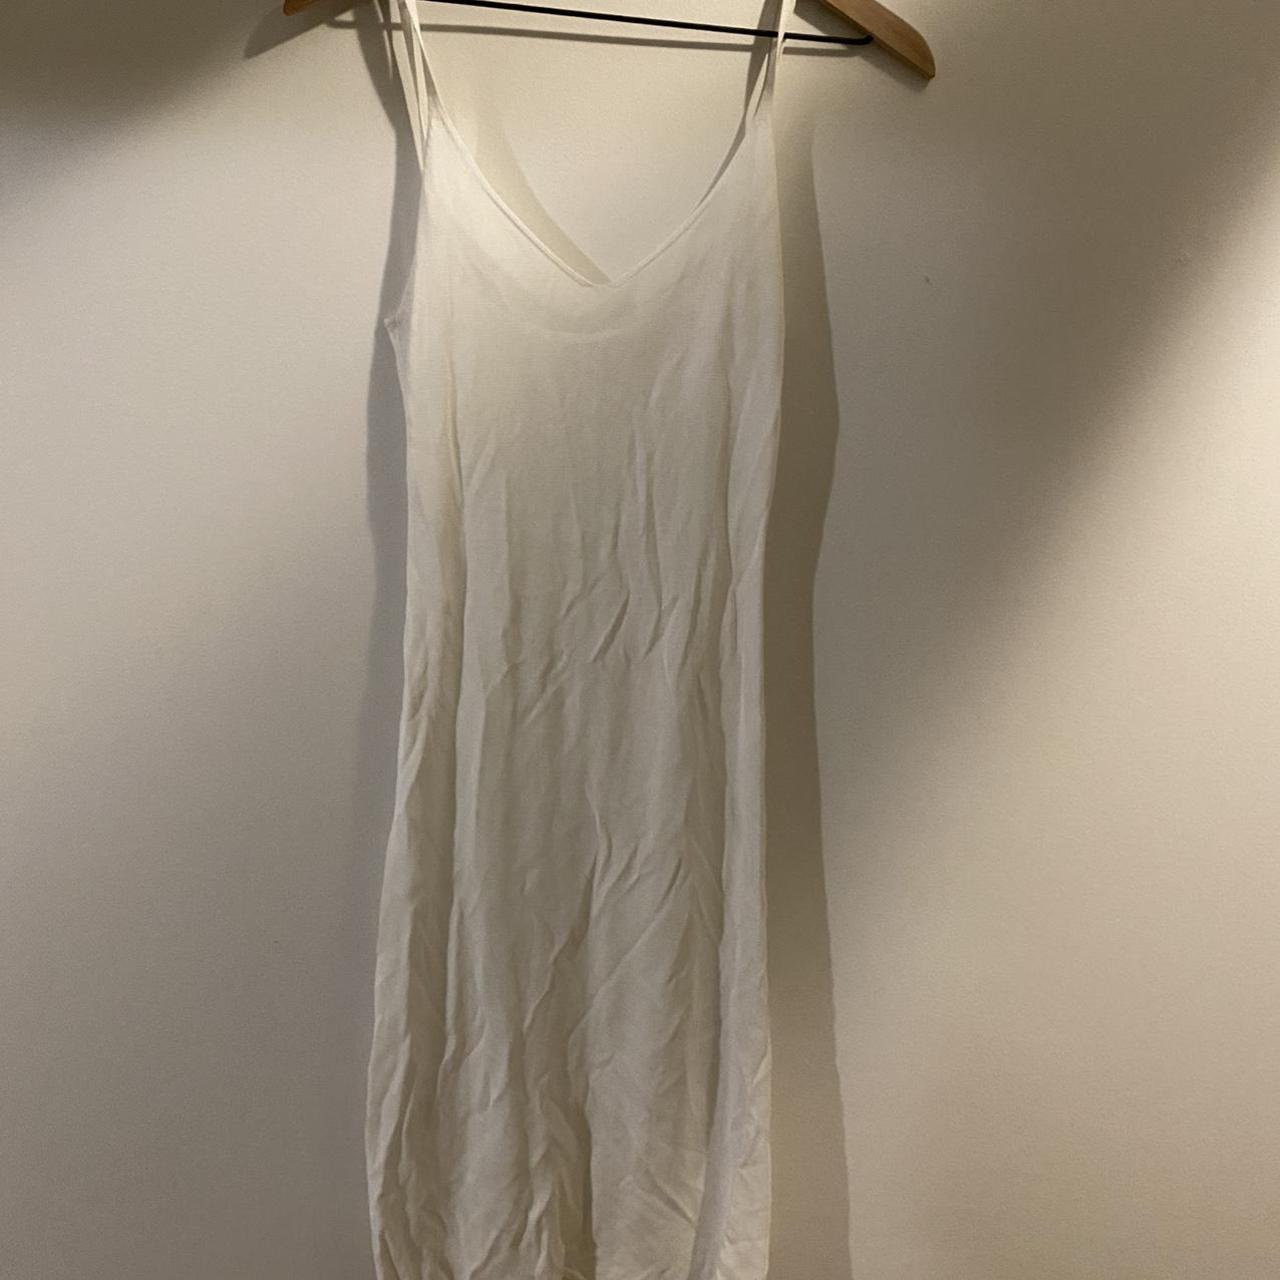 Altuzarra Women's White and Cream Dress (2)